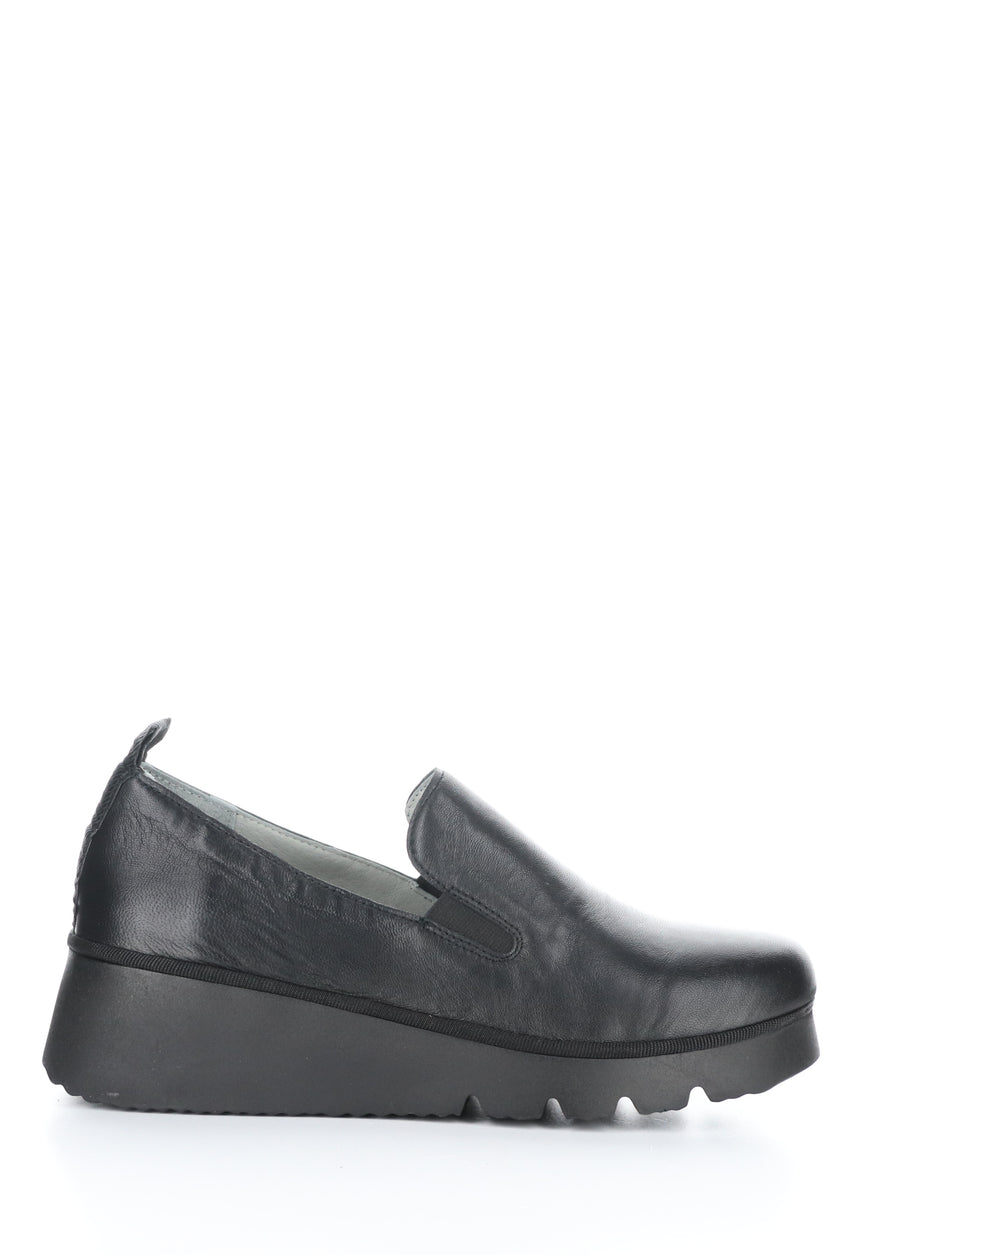 PECE406FLY 000 BLACK Slip-on Shoes